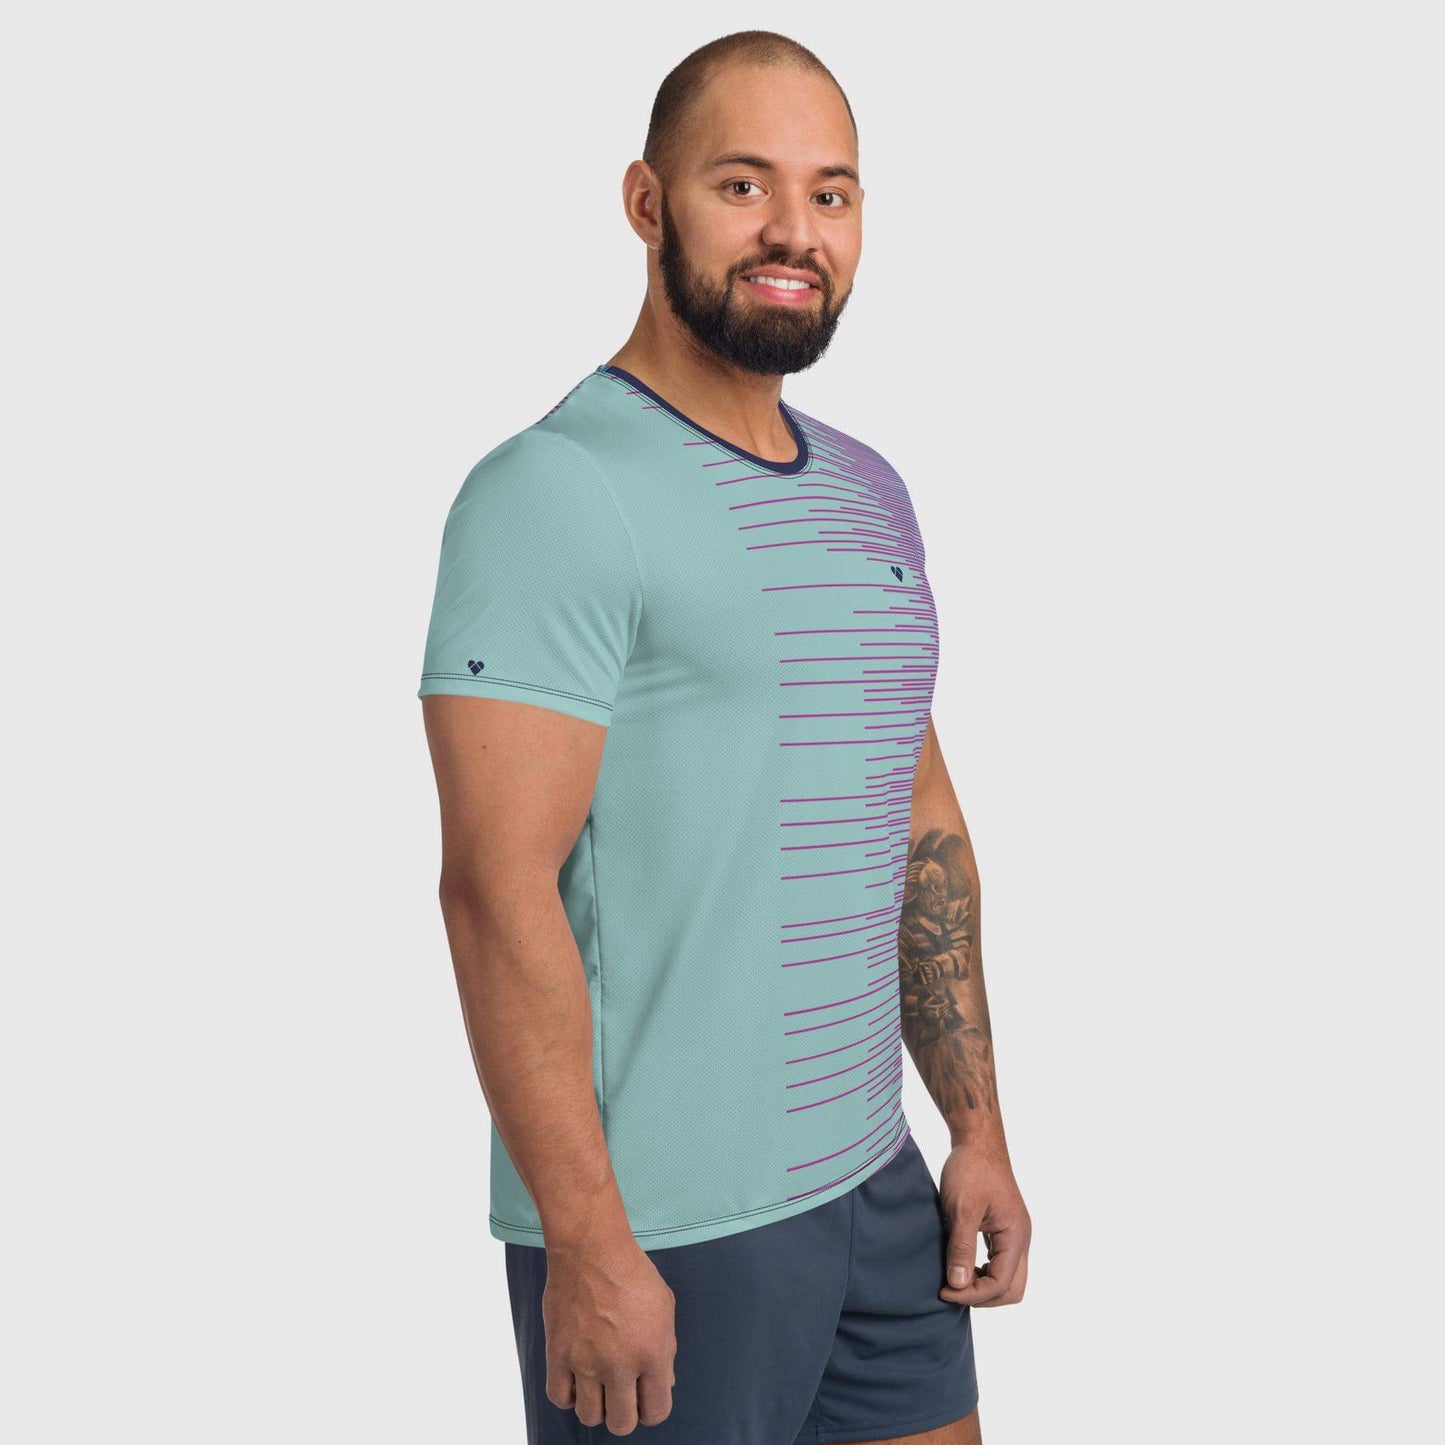 Confident man wears CRiZ AMOR's Mint Stripes Dual Shirt